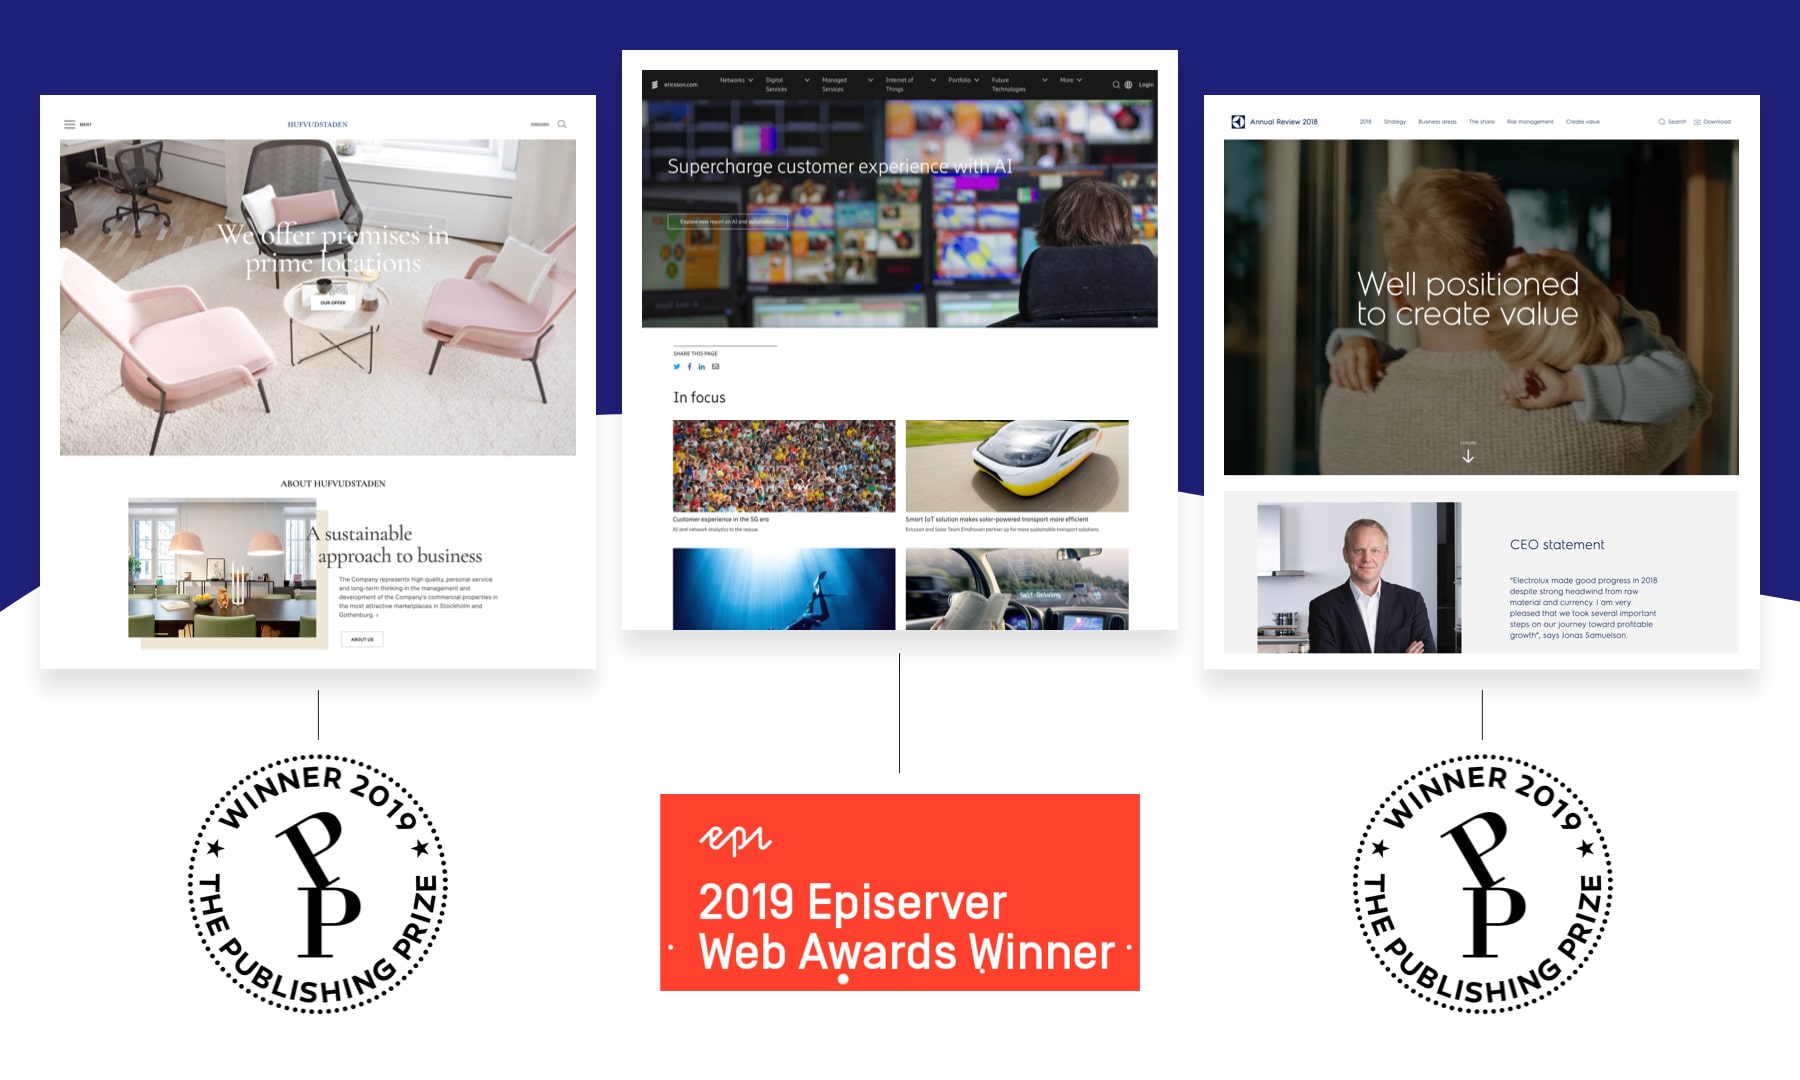 images/blog/2019/hufvudstaden-electrolux-and-ericsson-winners-of-prestigious-awards-1800x1080.jpg